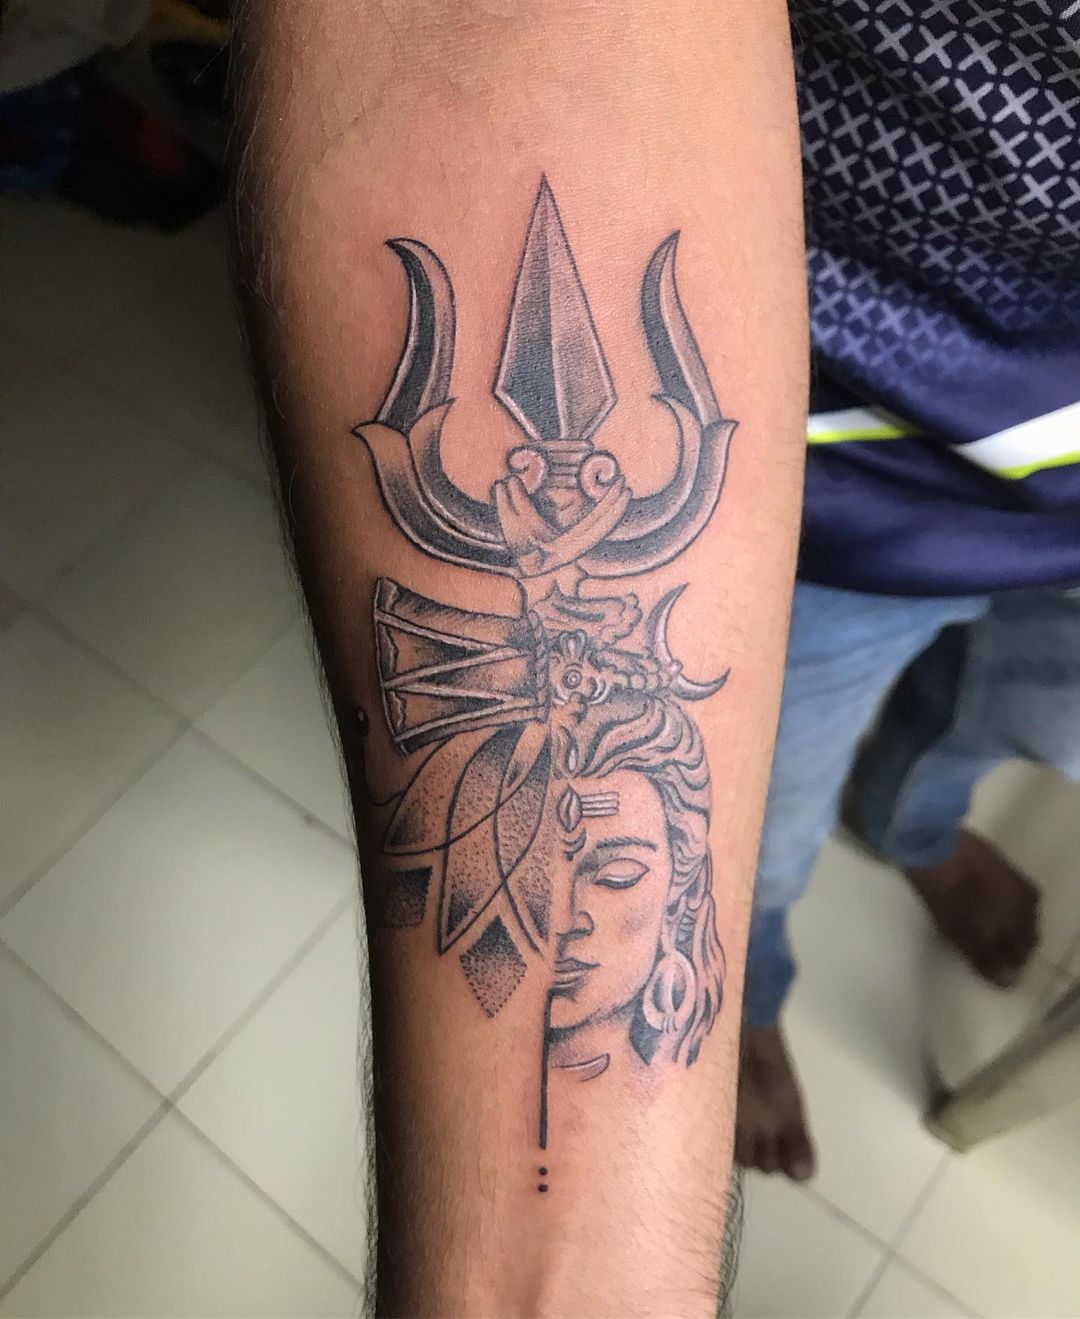 Another cool design would be Shivas Trishul and damru tattooBLACK   GREY SHIVA TRISHUL TATTOO 